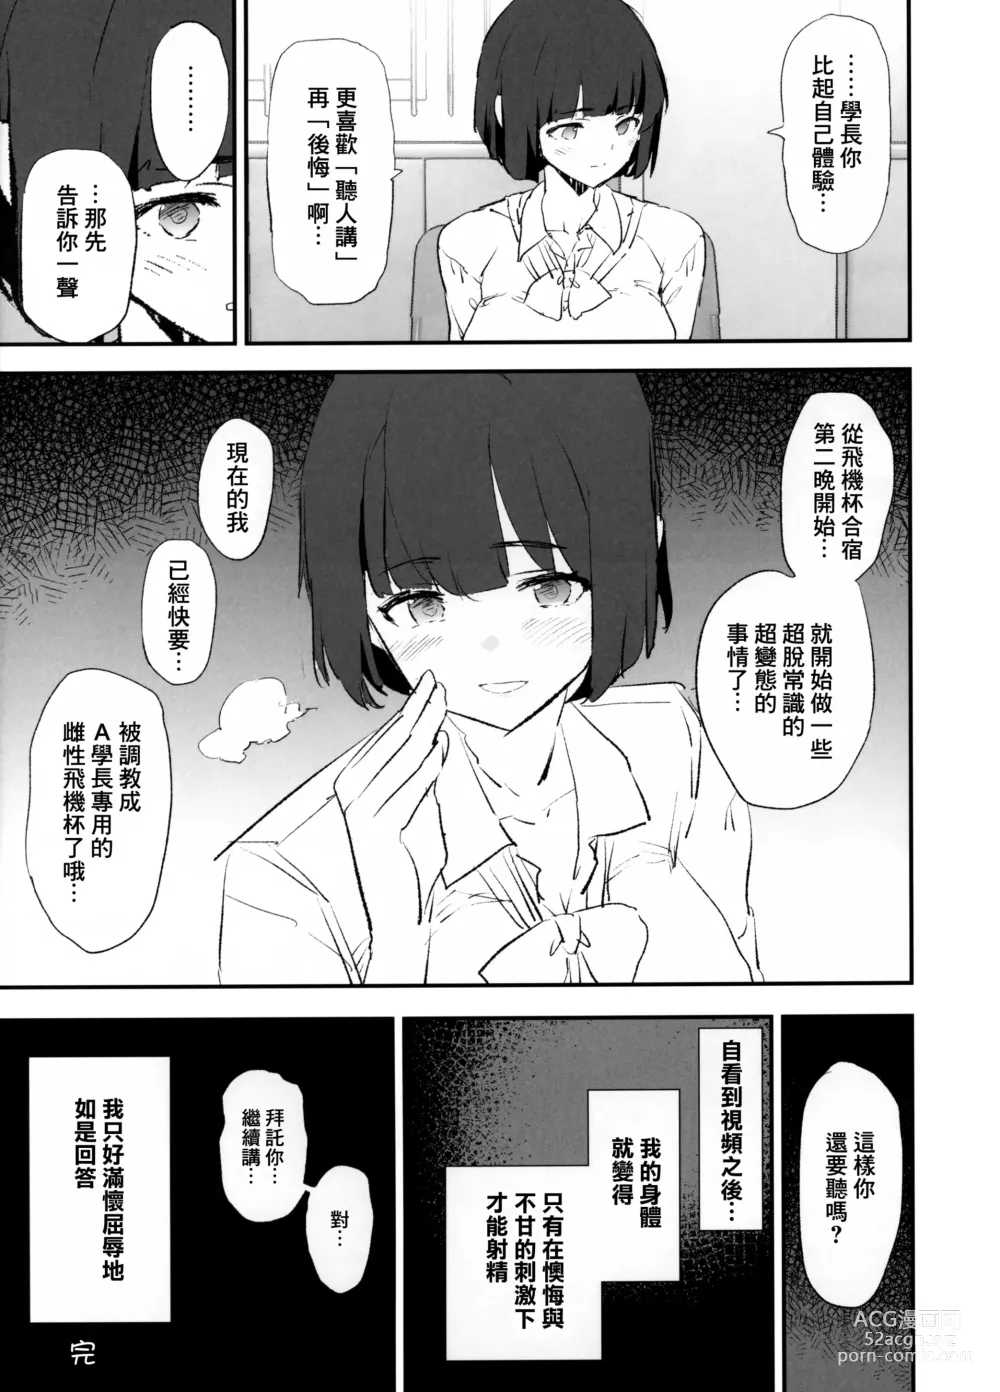 Page 33 of doujinshi 唯獨沒有叫上我的飛機杯合宿 + 紗季學姐